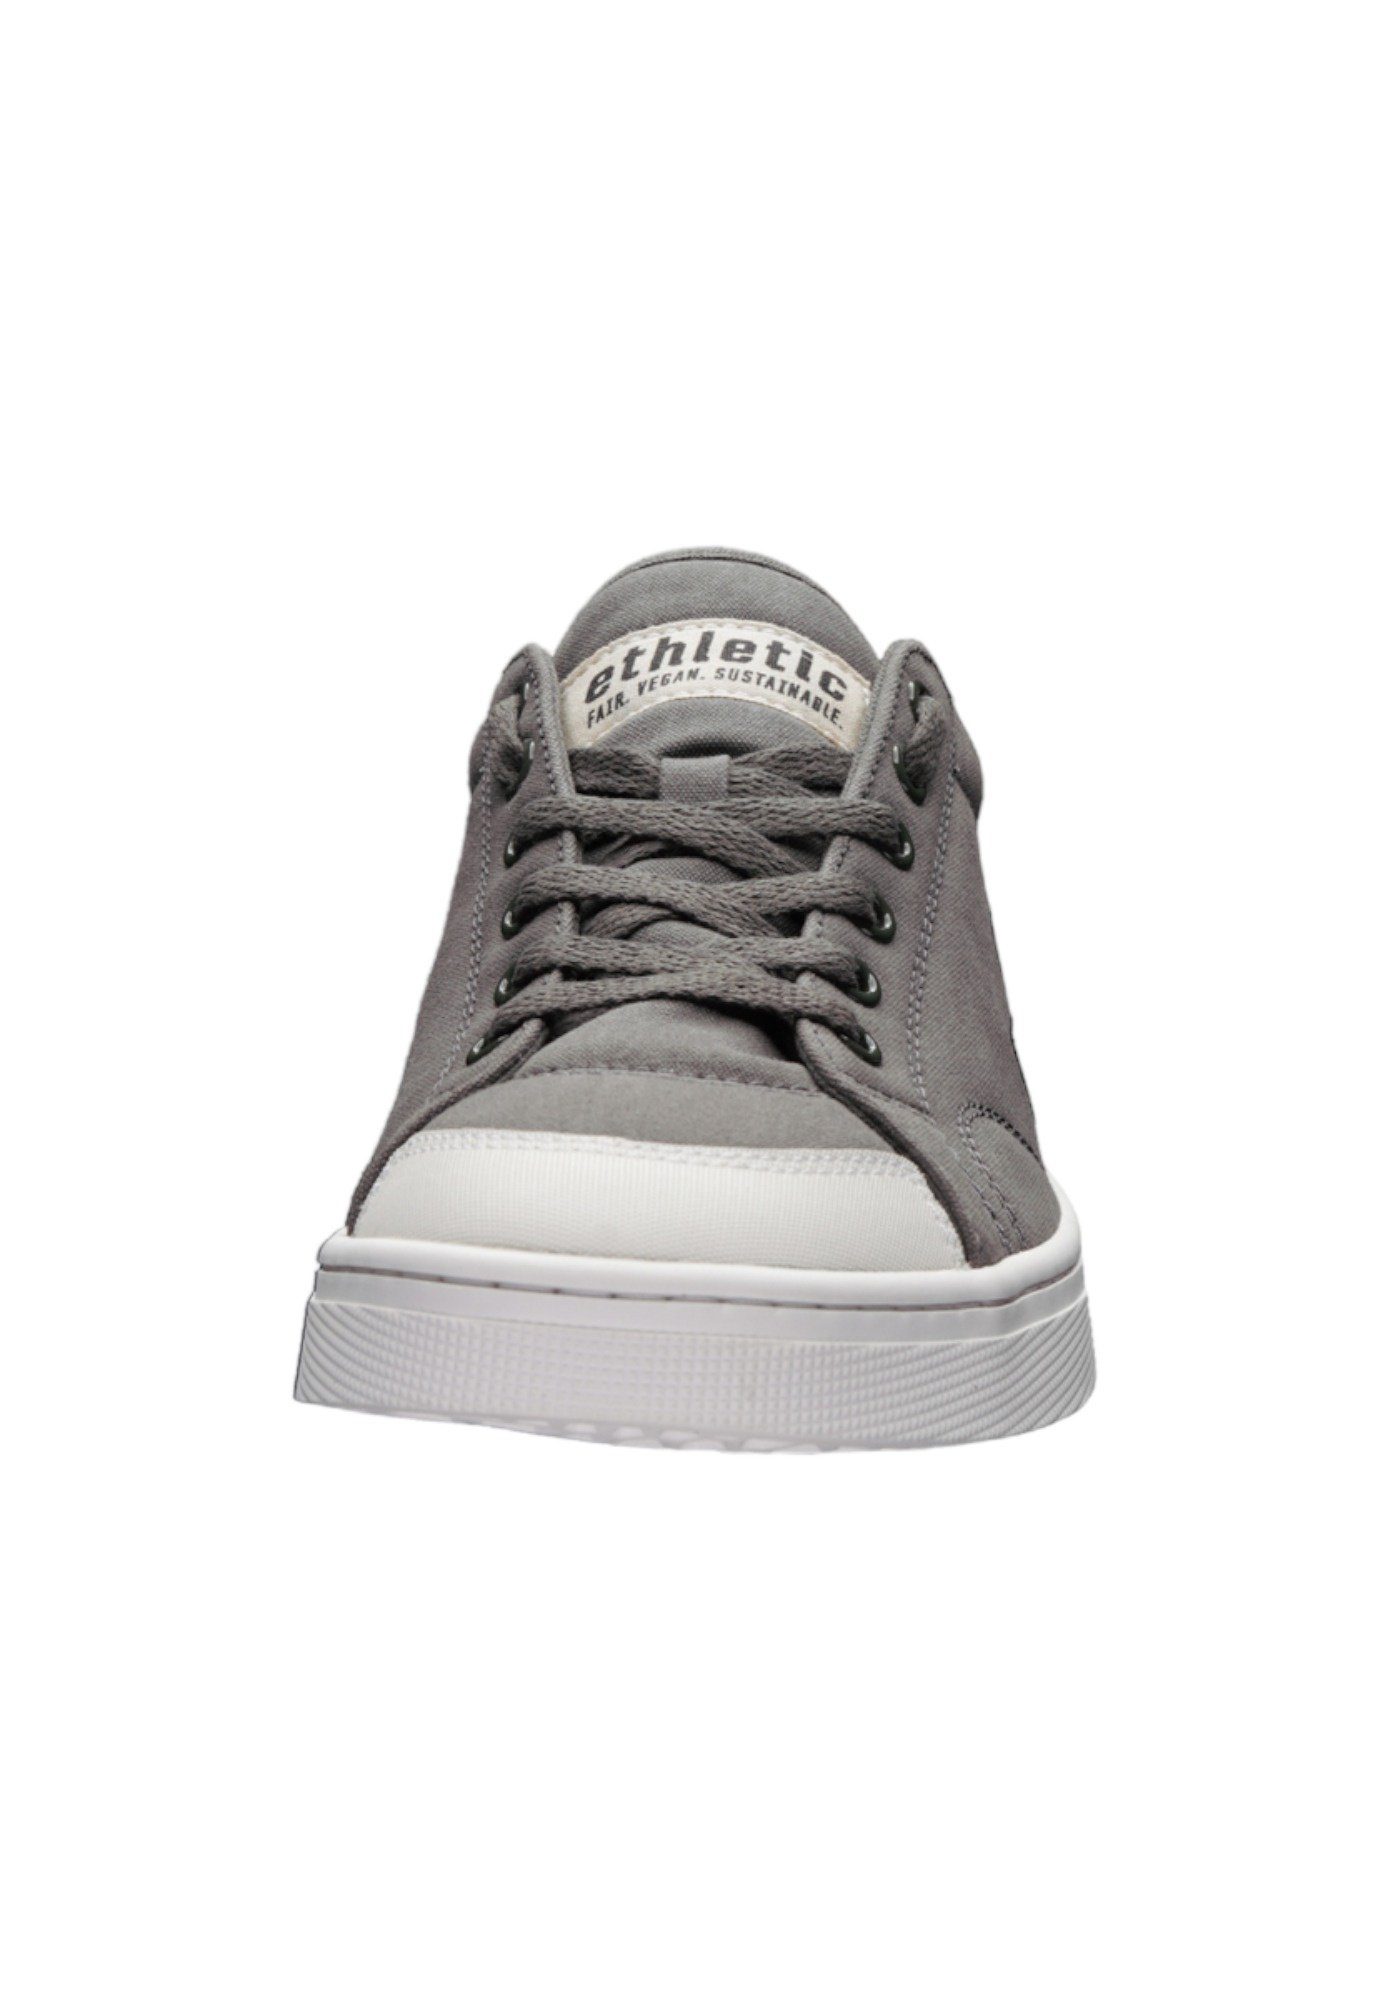 Black Cut Grey Produkt - Fairtrade Lo Donkey Jet ETHLETIC Active Sneaker